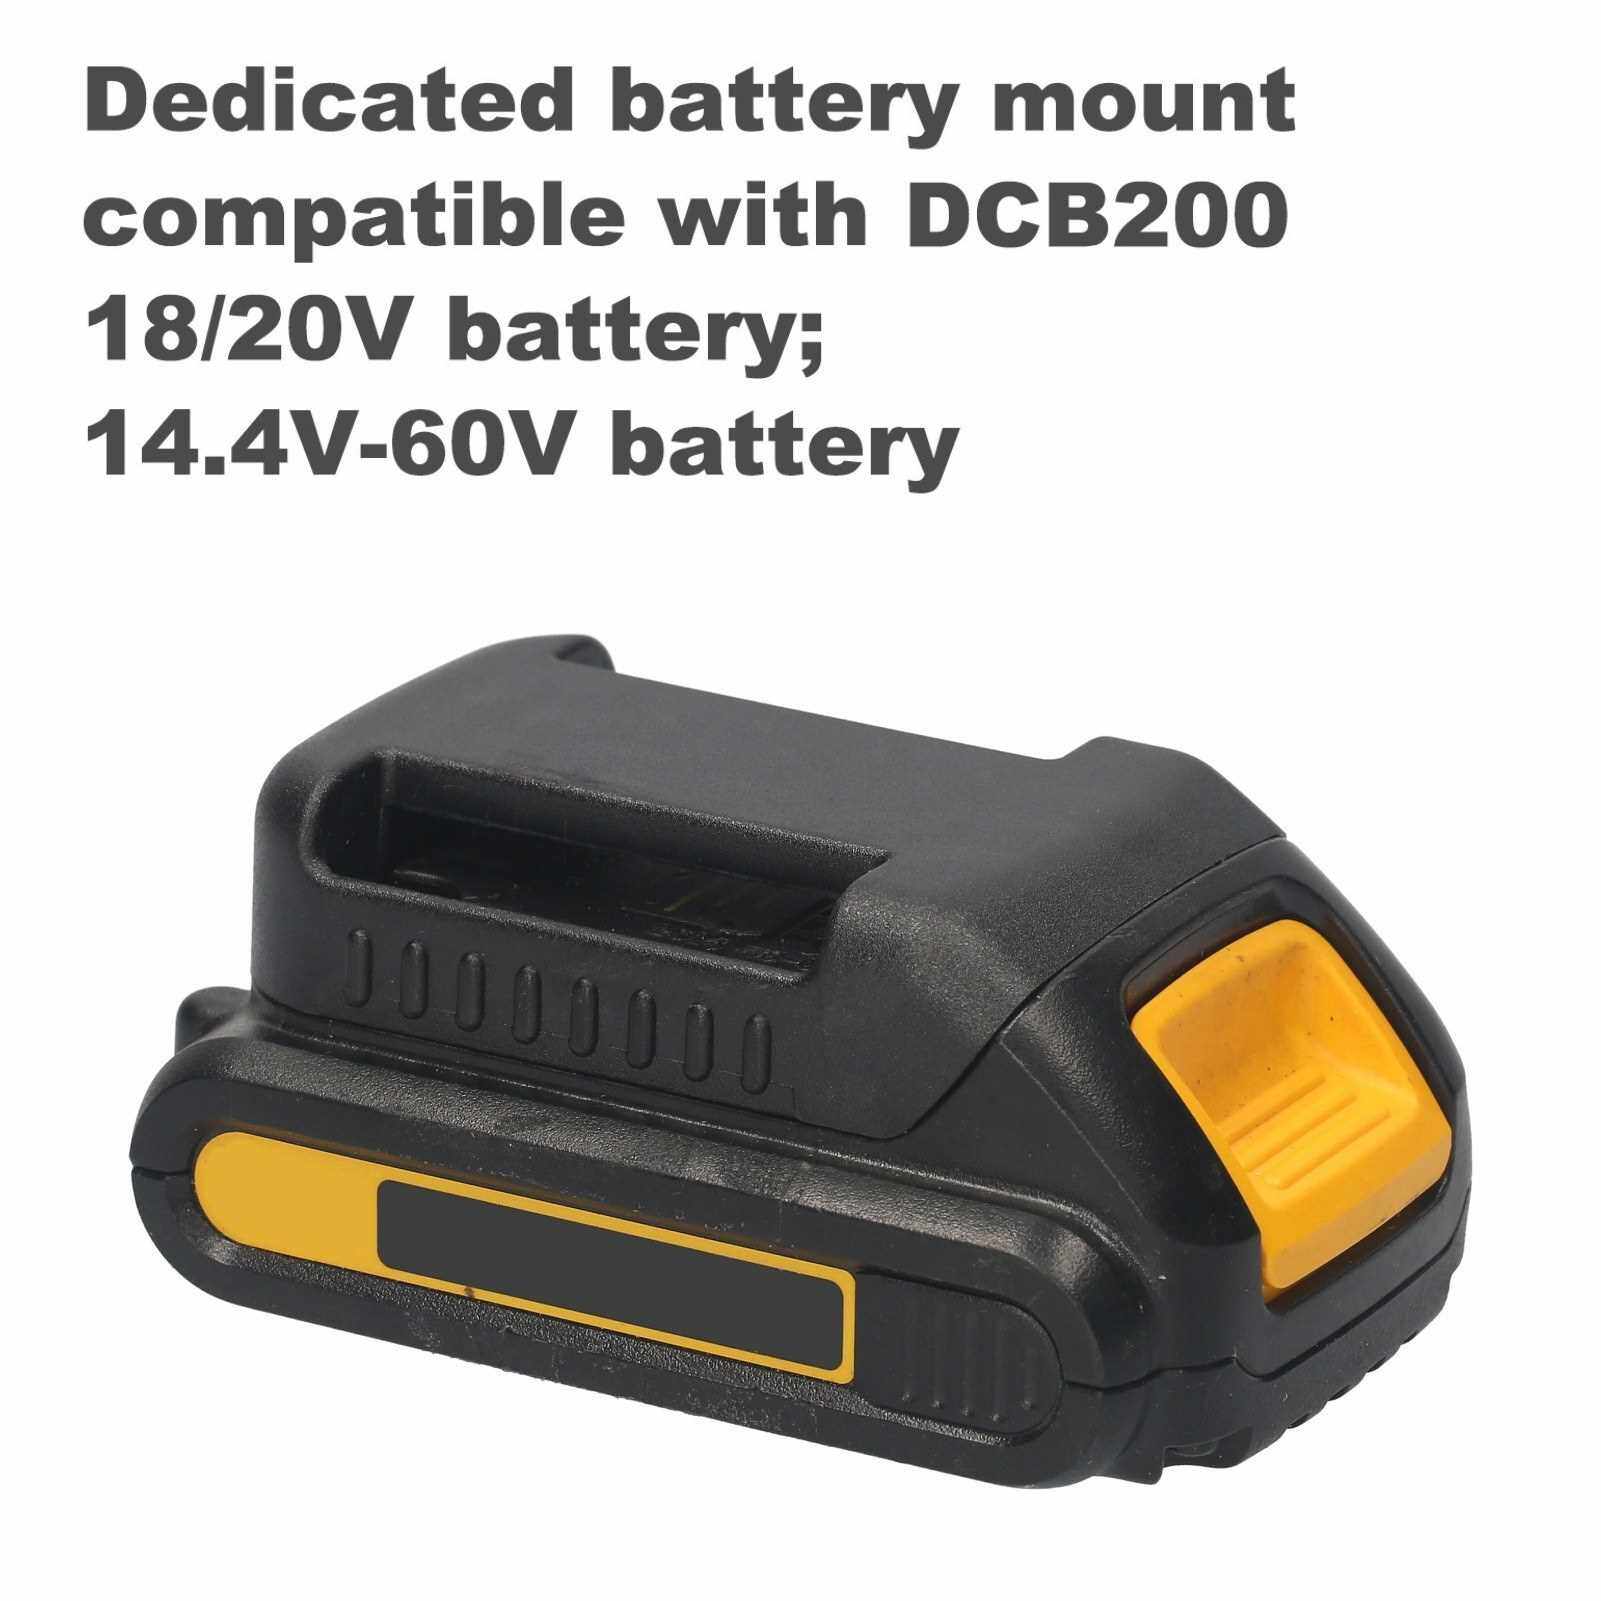 5pcs Lithium-Ion Batteries Storage Bracket Dedicated Battery Clip Battery Mount Dock Holder Replacement for DCB200 18/20V Battery 14.4V-60V Battery (Black)